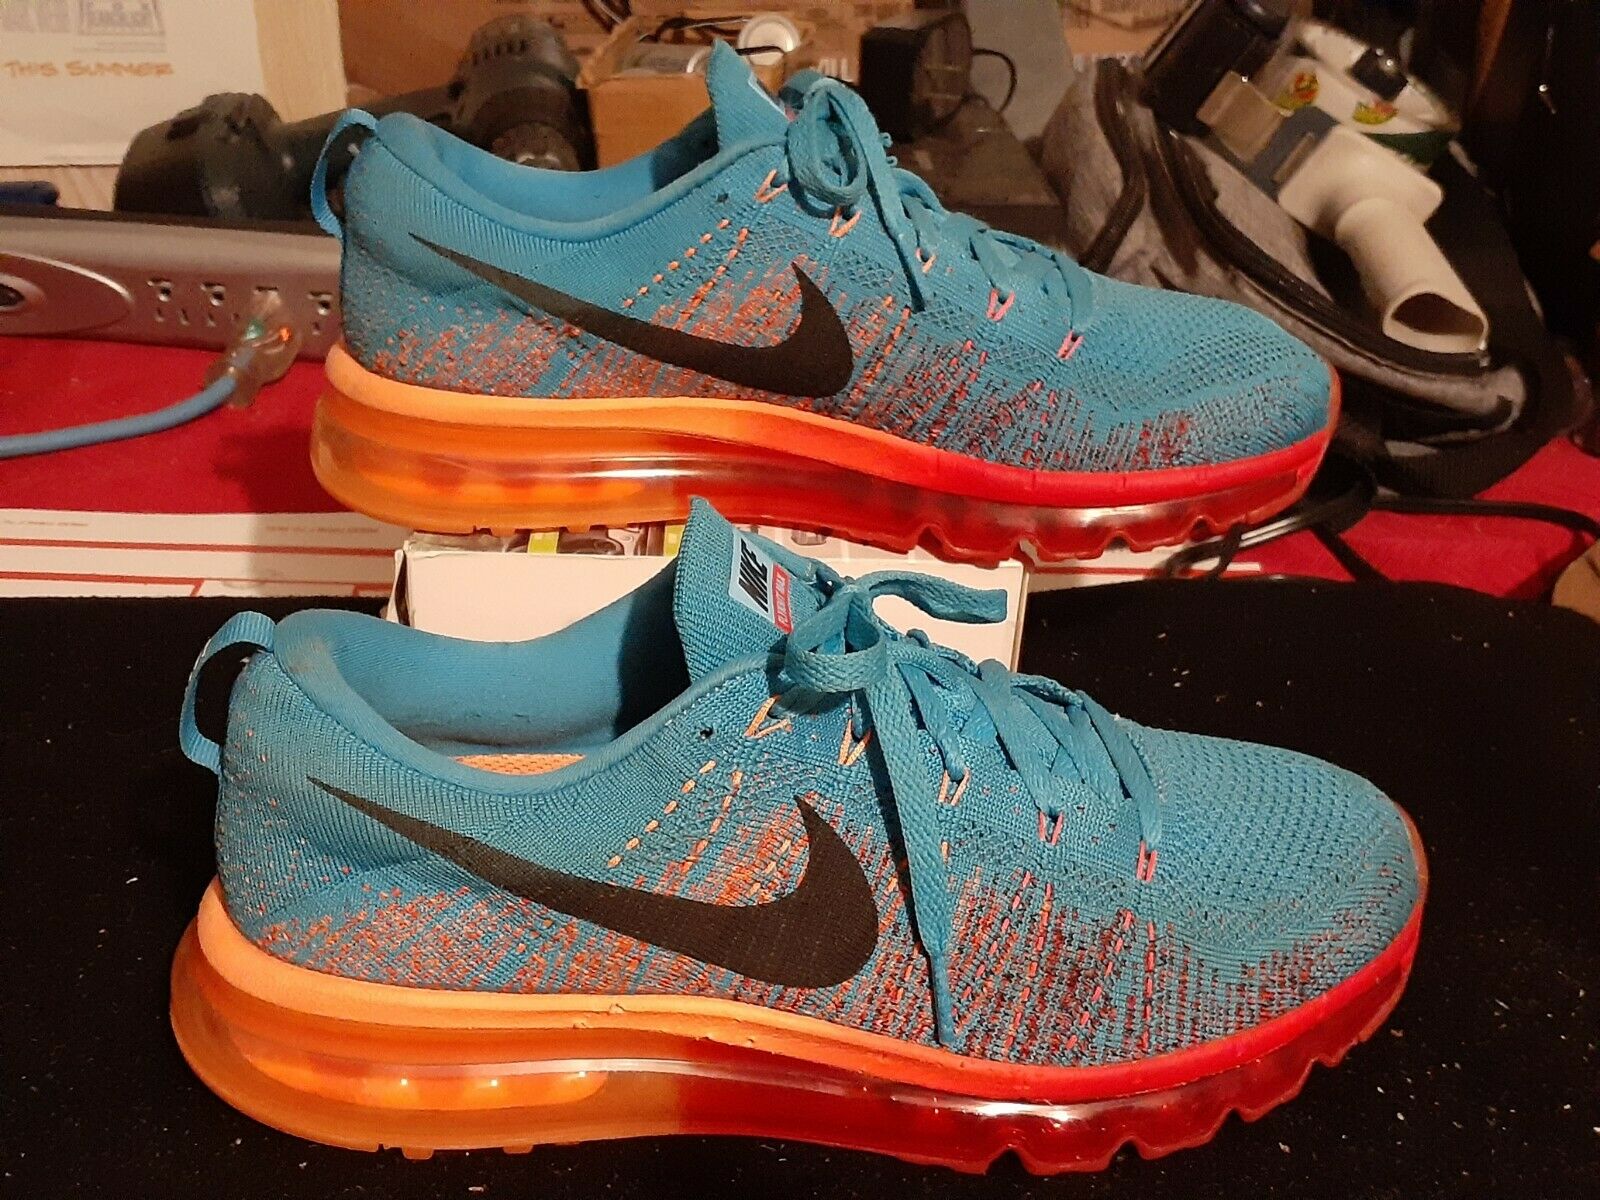 Nike Flyknit Max Vivid Blue Orange Red Men's running shoes size 8.5 620469-406